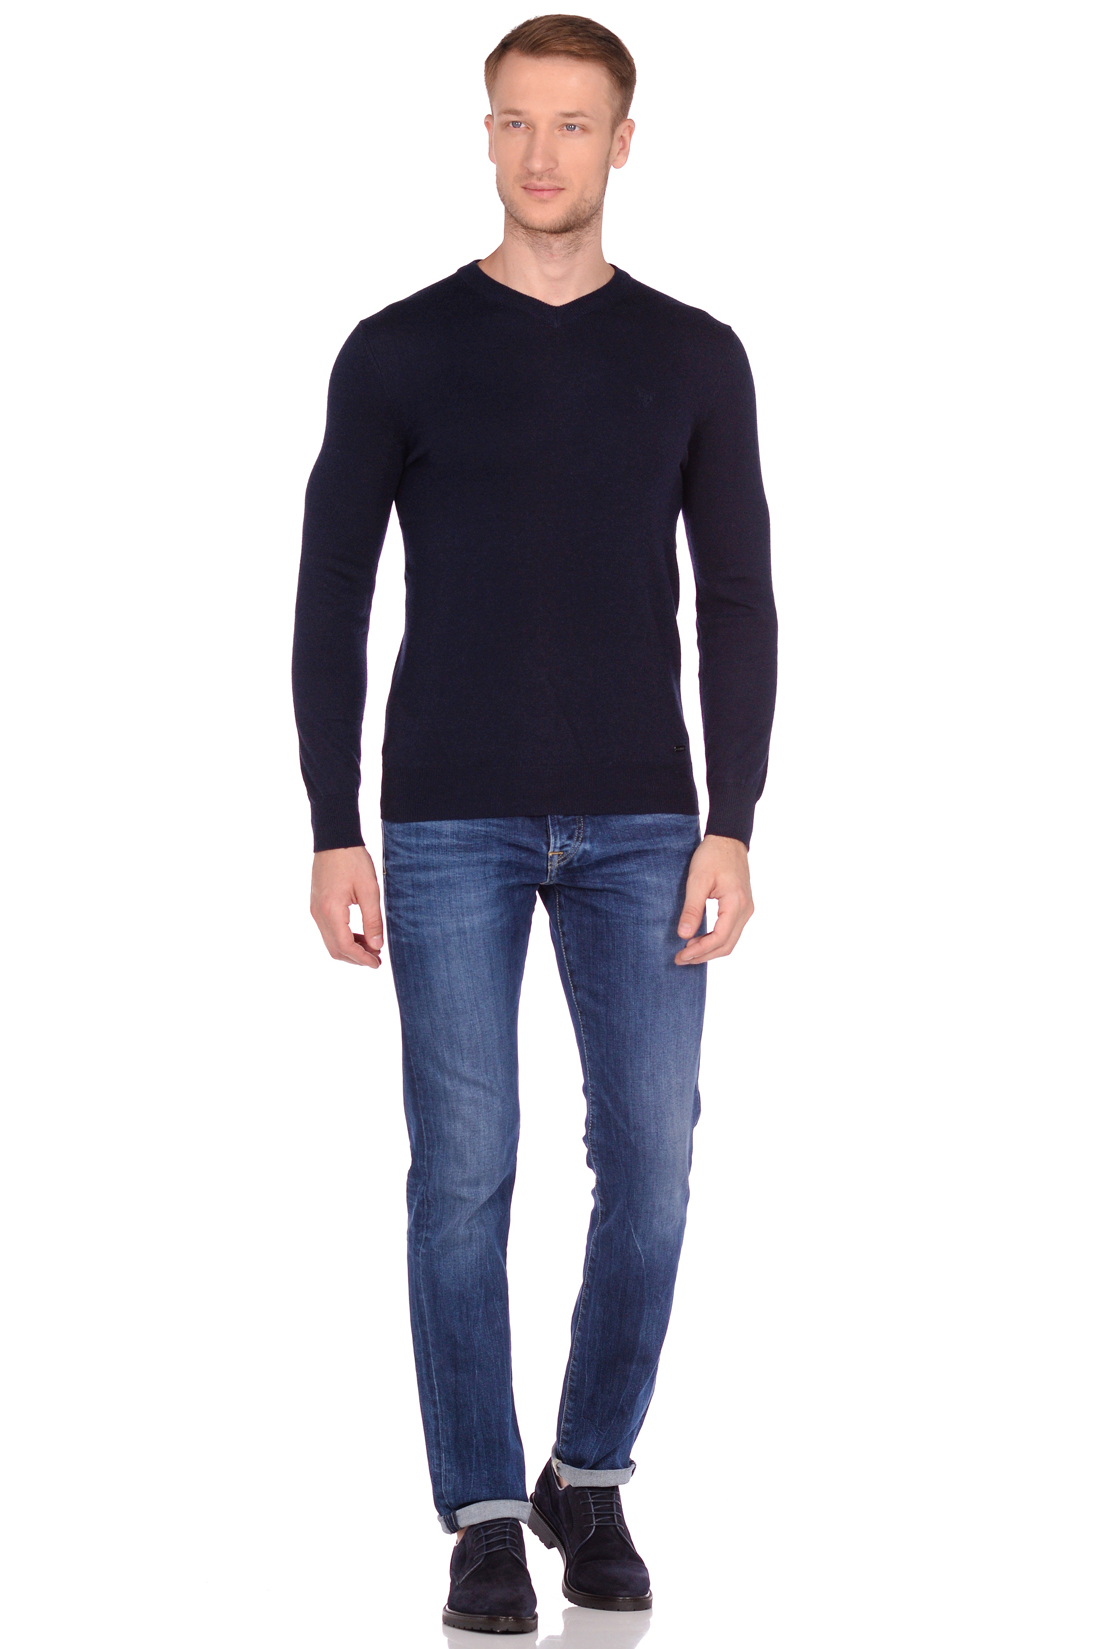 Базовый пуловер (арт. baon B638703), размер L, цвет deep navy melange#синий Базовый пуловер (арт. baon B638703) - фото 3